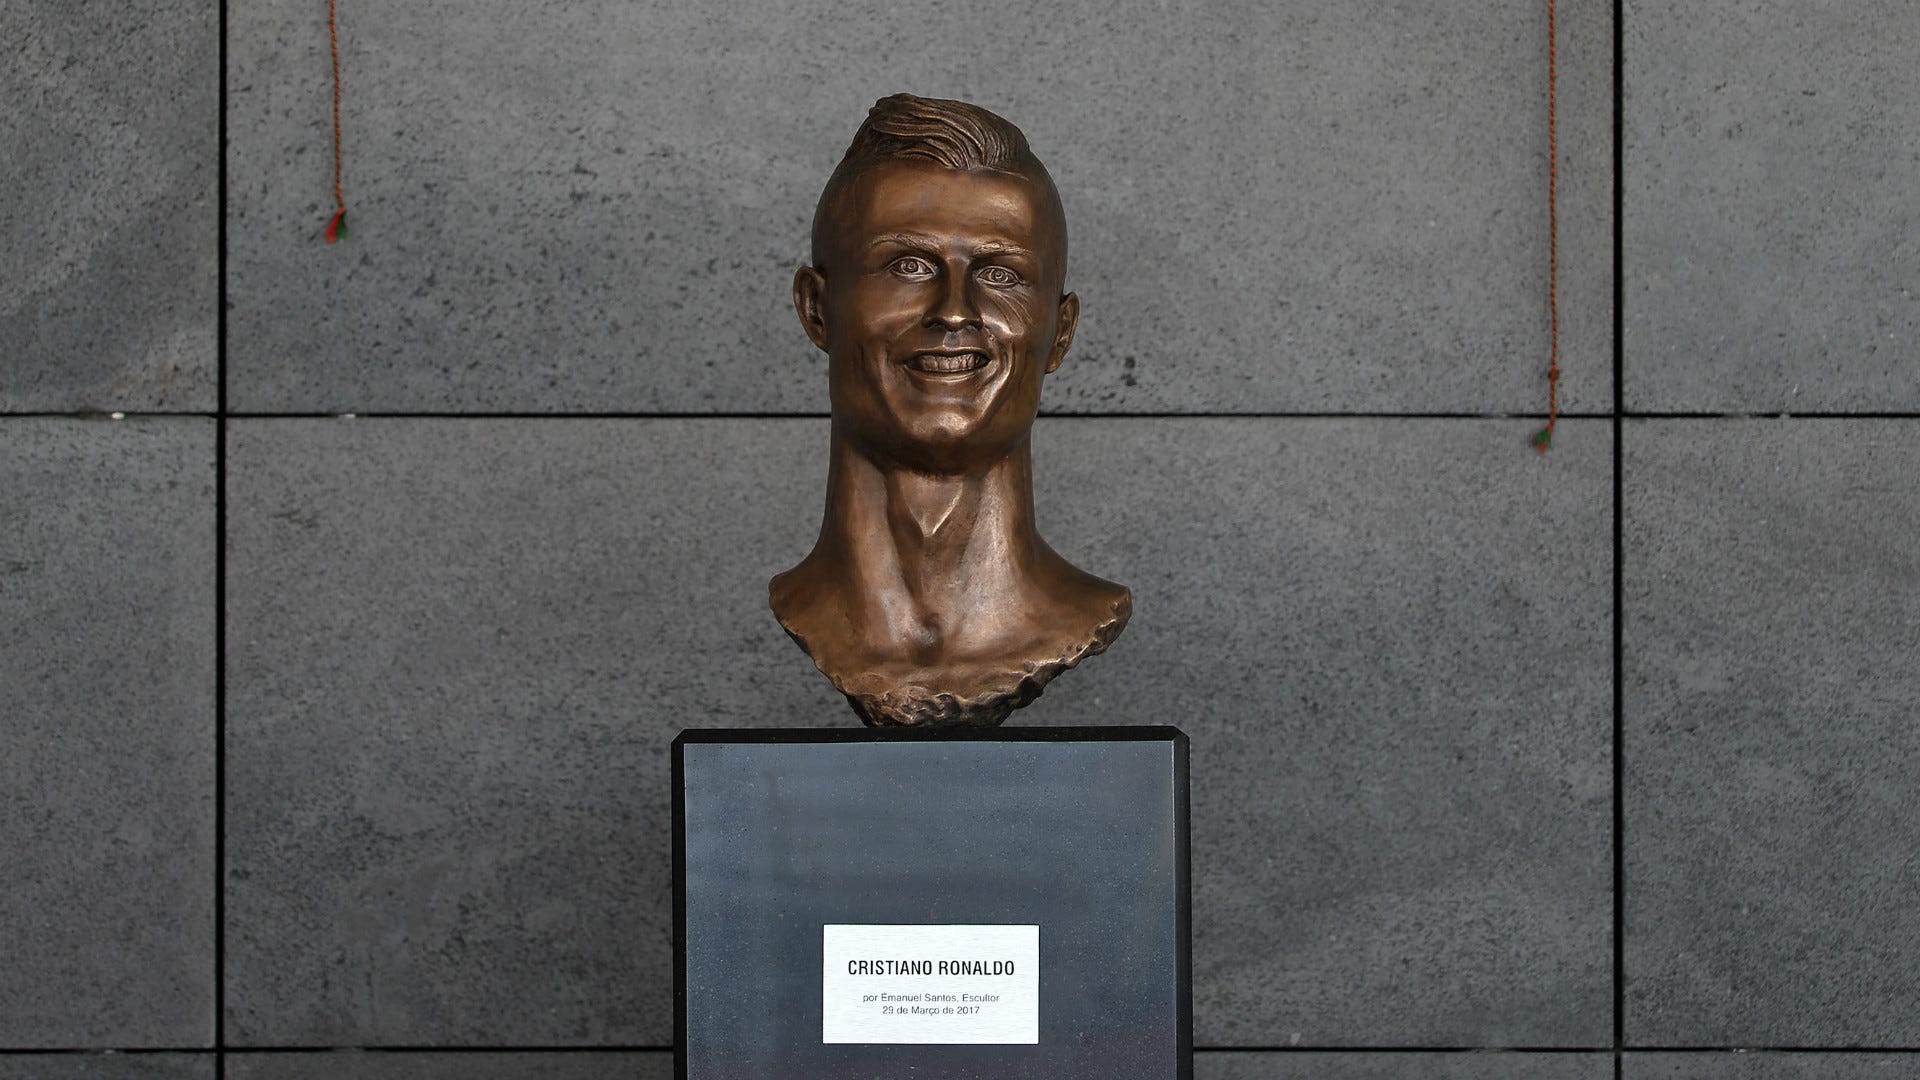 Cristiano Ronaldo's bronze bust at Madeira